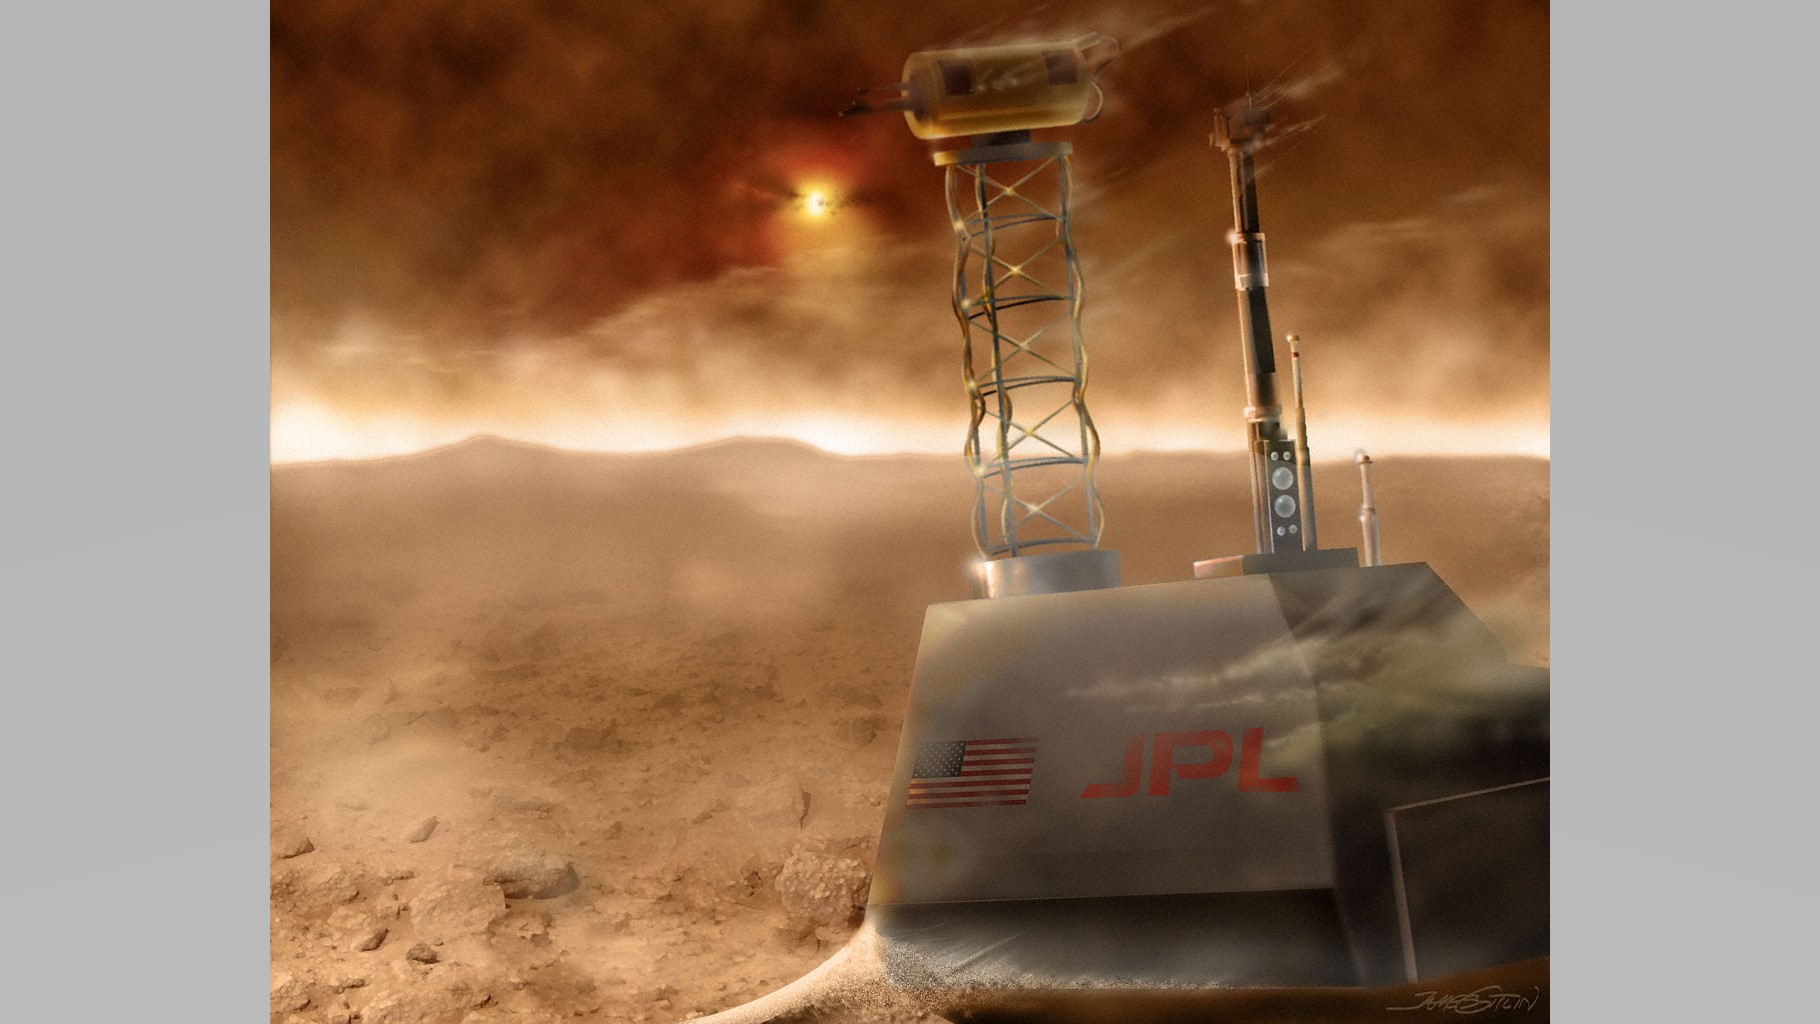 JPL-branded equipment in a haze of dust